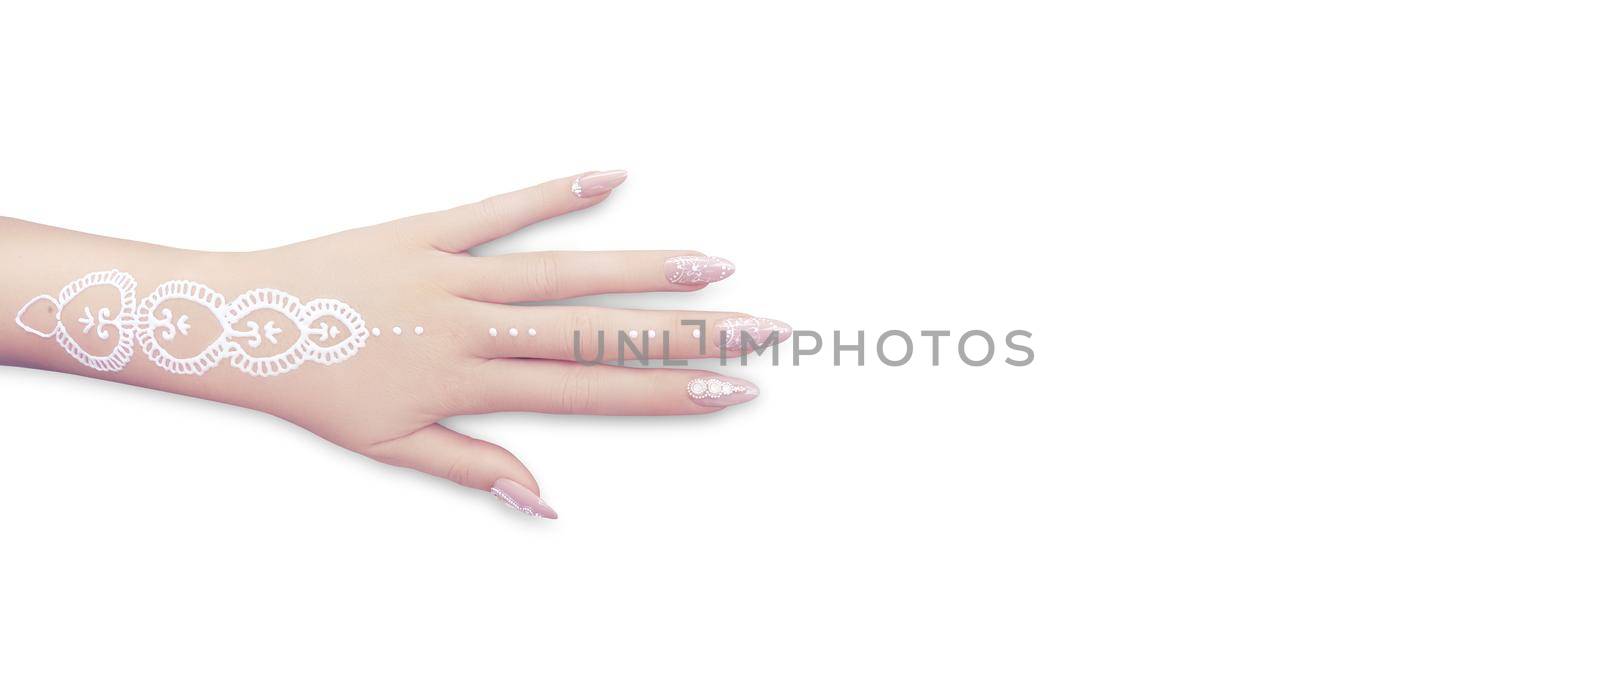 Nail polish trends. Woman with stylish manicure.